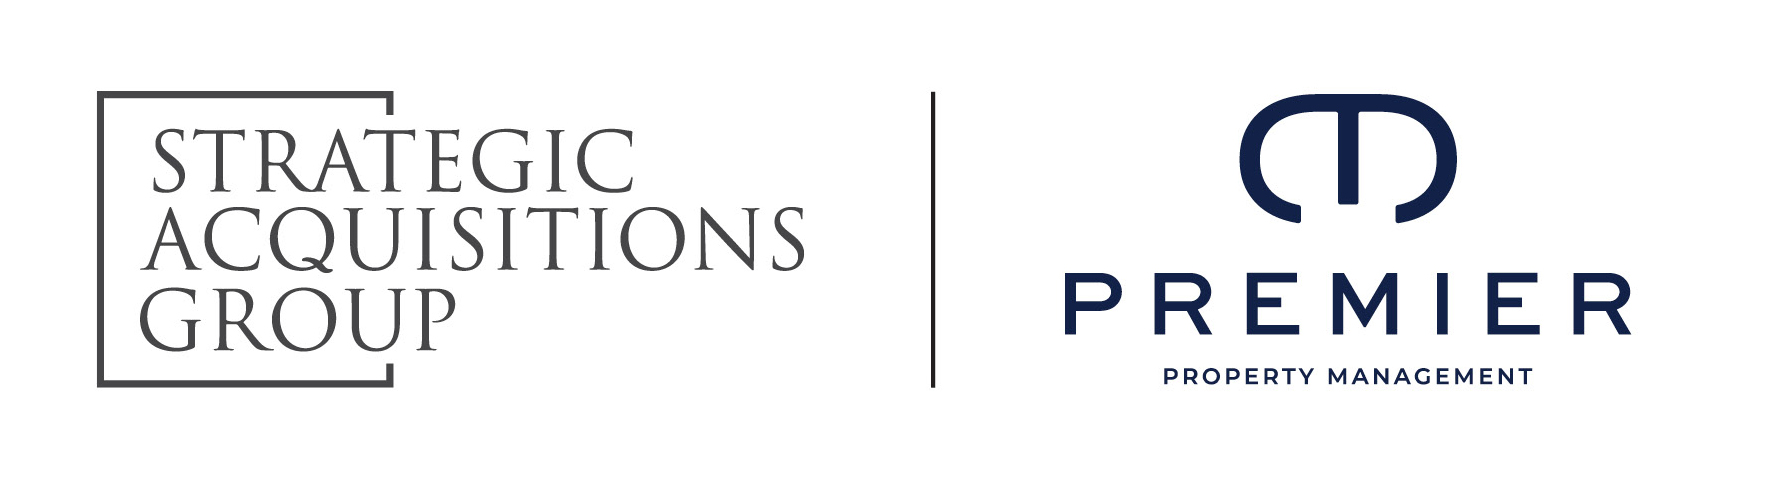 Strategic Acquisitions_Premier logo pair.jpg